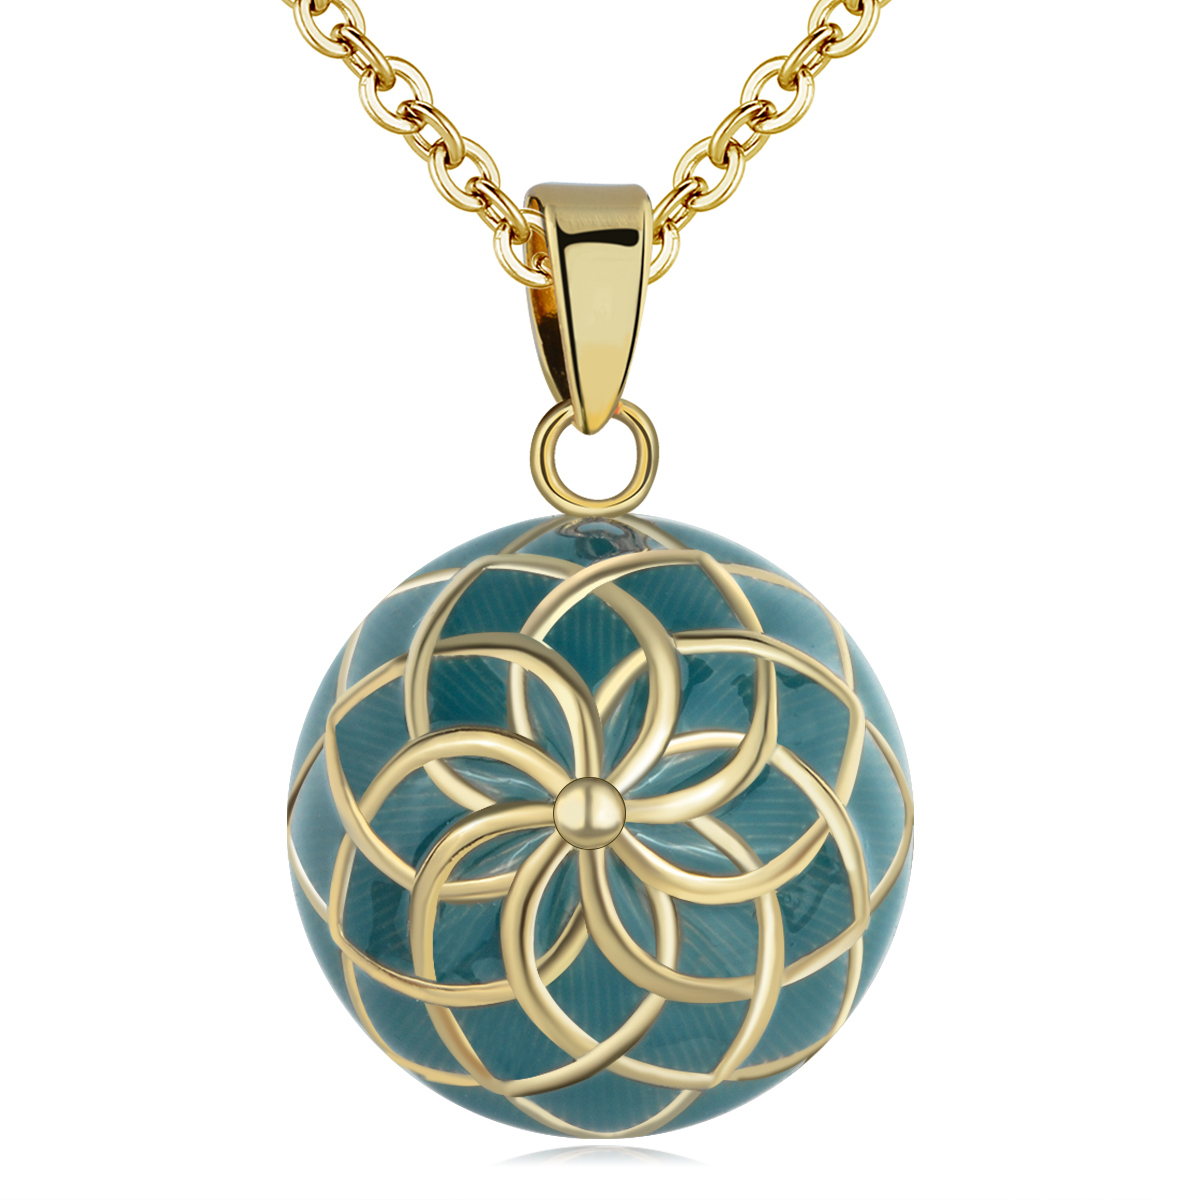 Merryshine Jewelry Best Selling Vintage Design Angel Caller Pregnancy Bola Harmony Balls Necklace